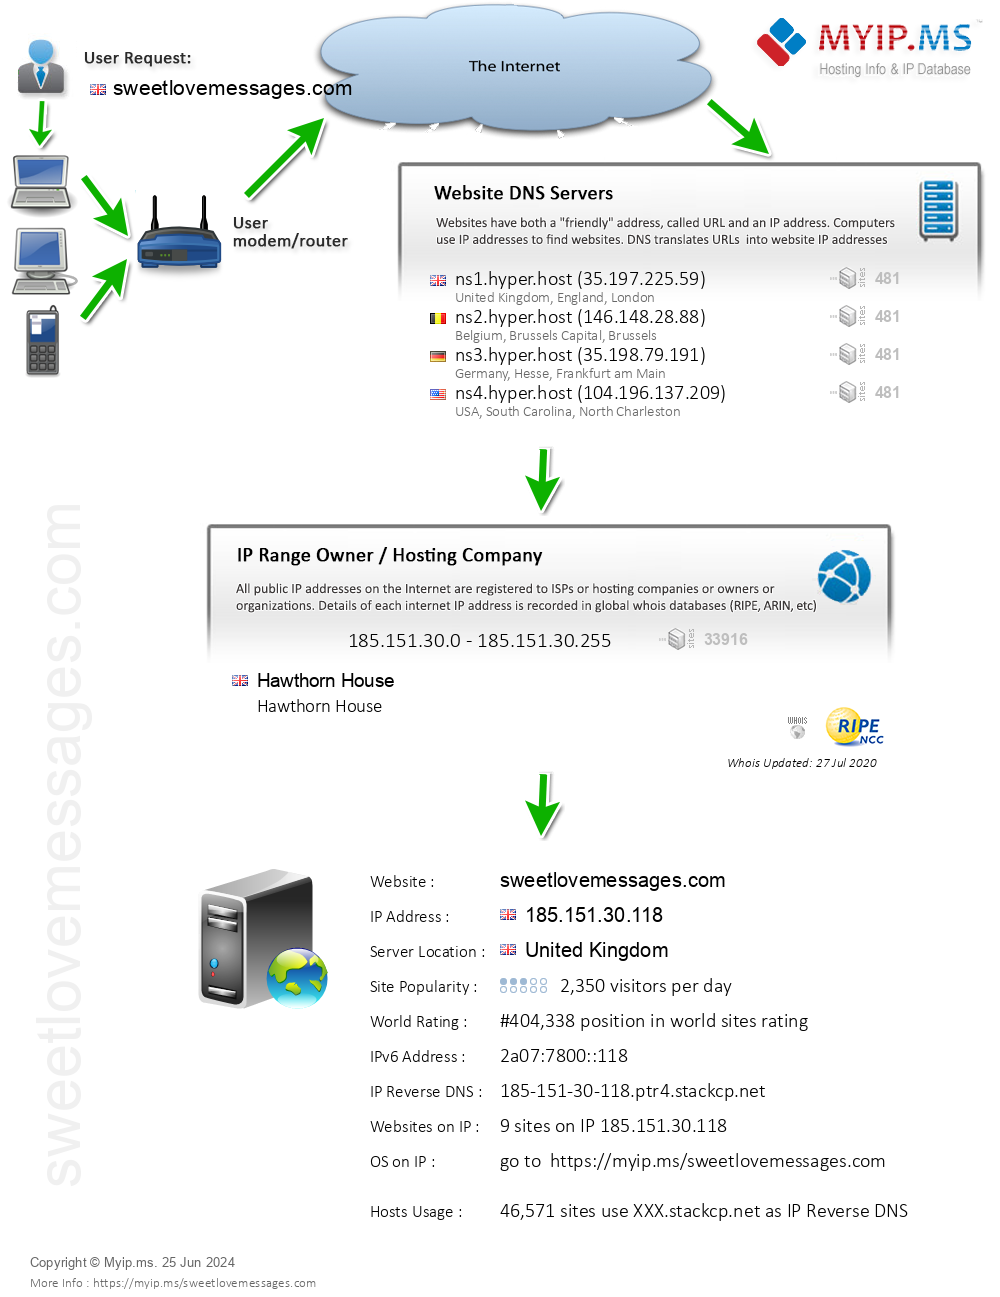 Sweetlovemessages.com - Website Hosting Visual IP Diagram